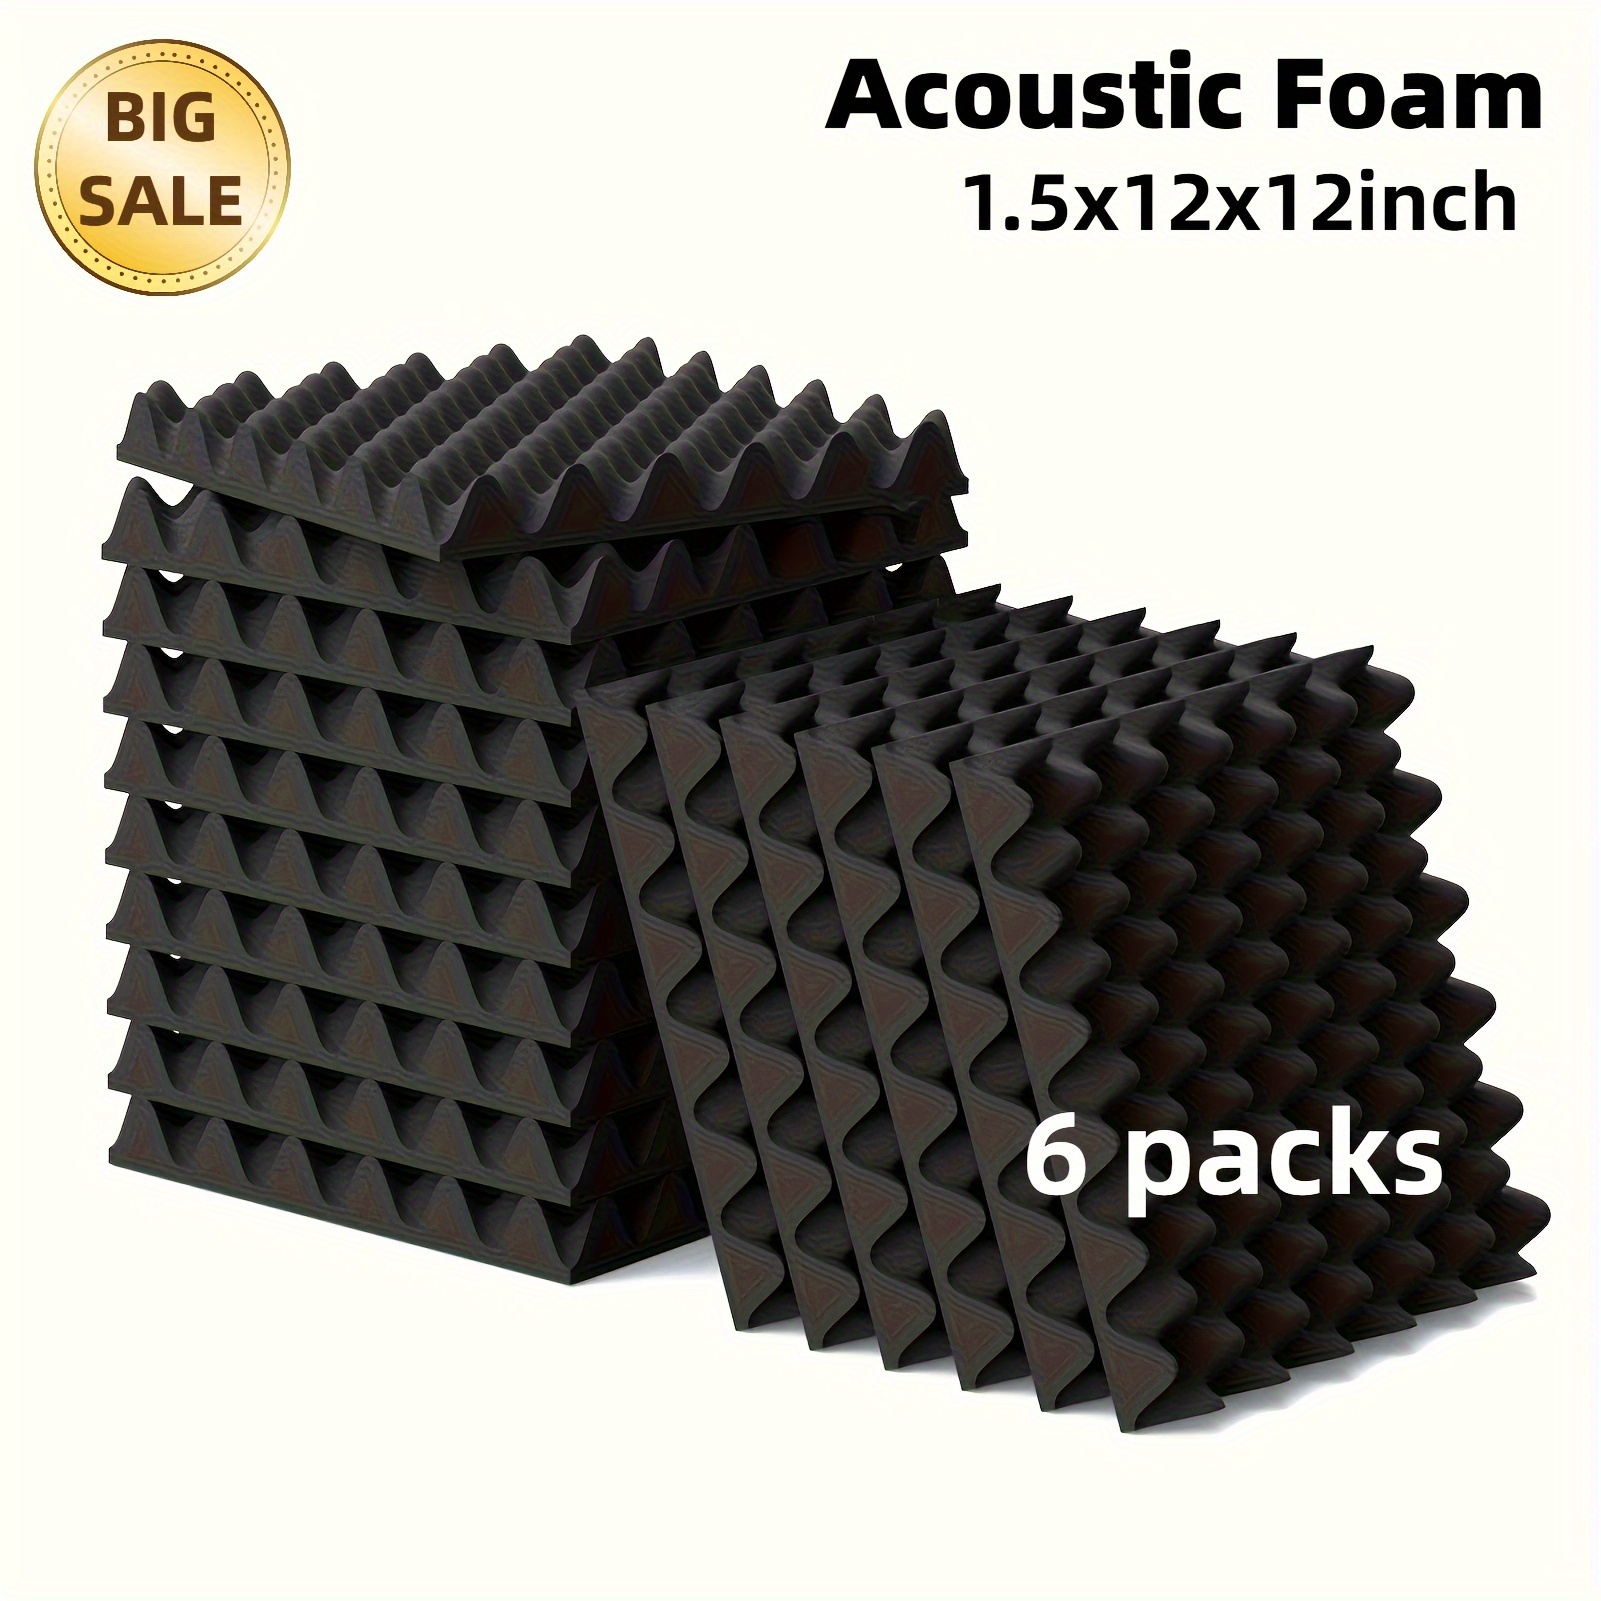 Paquete de 6 espuma acústica de 1.5 x 12 x 12 pulgadas, espuma de caja de  huevos a prueba de sonido (diseño más insonorizante), paneles acústicos